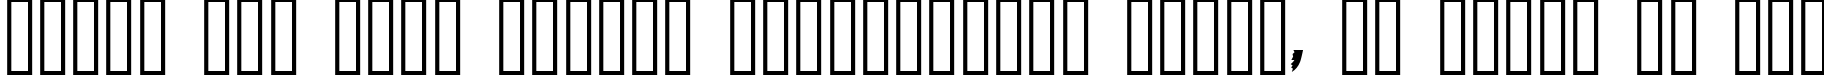 Пример написания шрифтом Knuckle Sandwich Classic Italic текста на русском